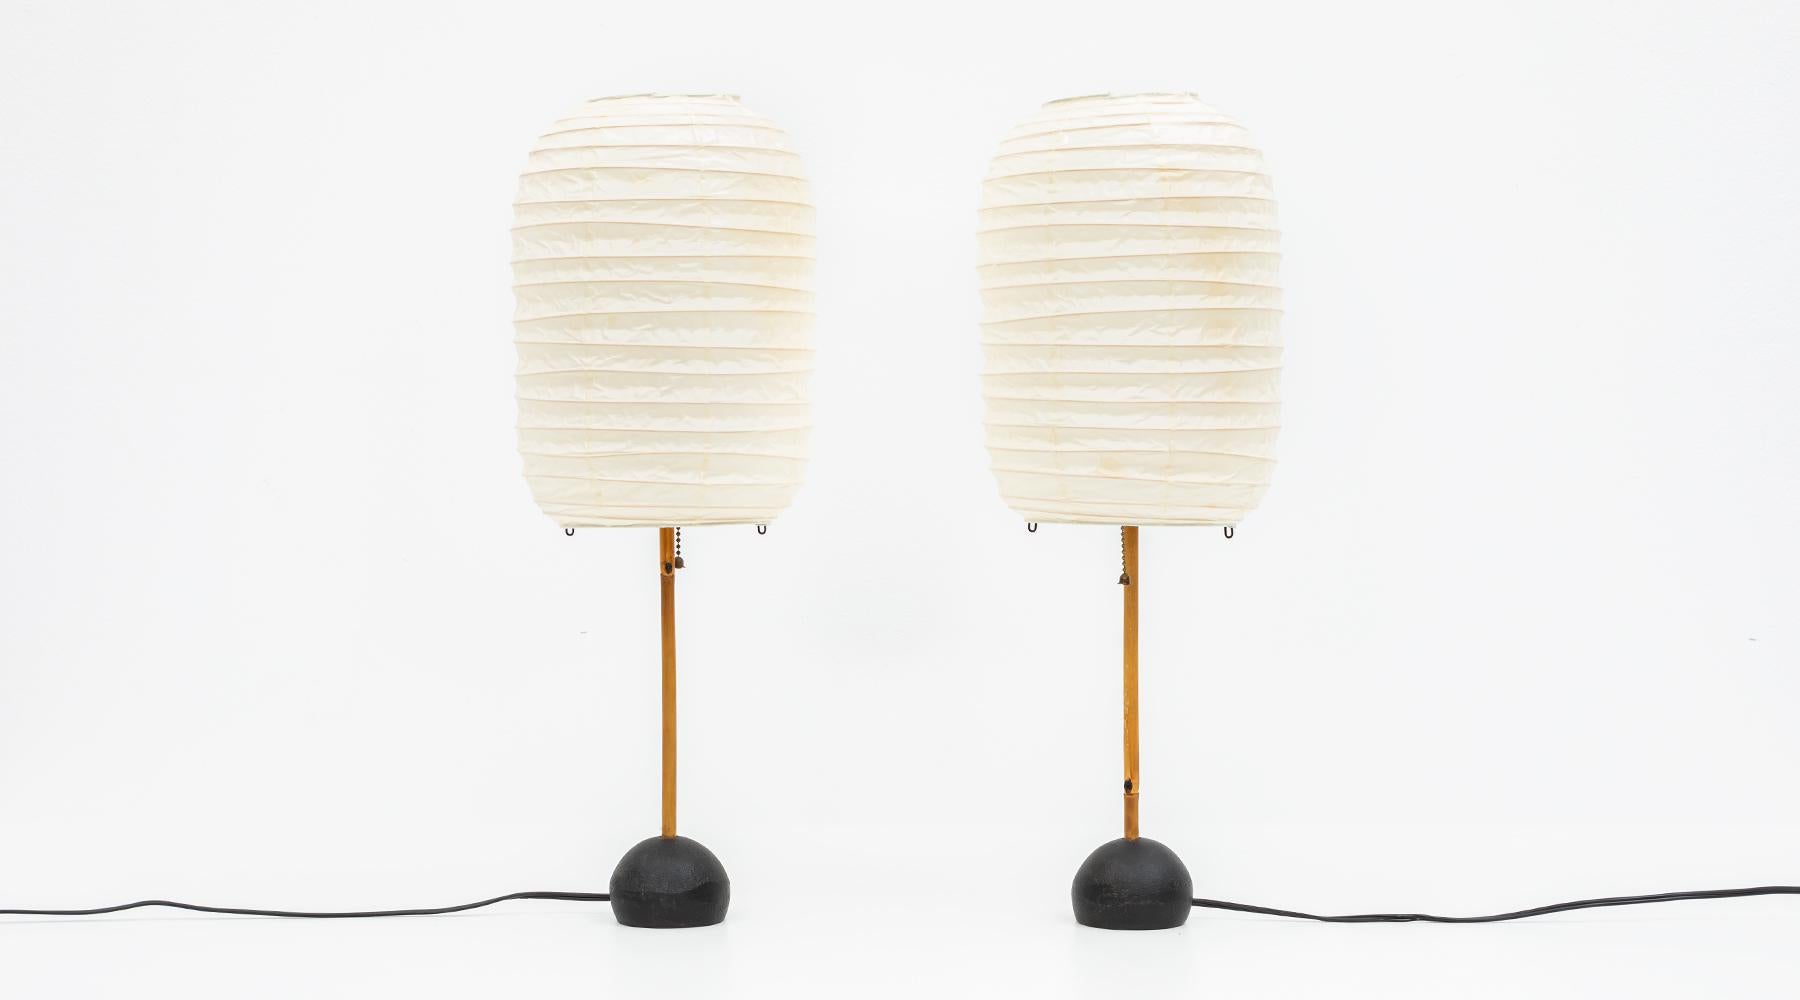 Sculptural light, Table Lamps, Akari, Isamu Noguchi for Ozeki, USA, 1952.

Two early example of Isamu Noguchi´s 